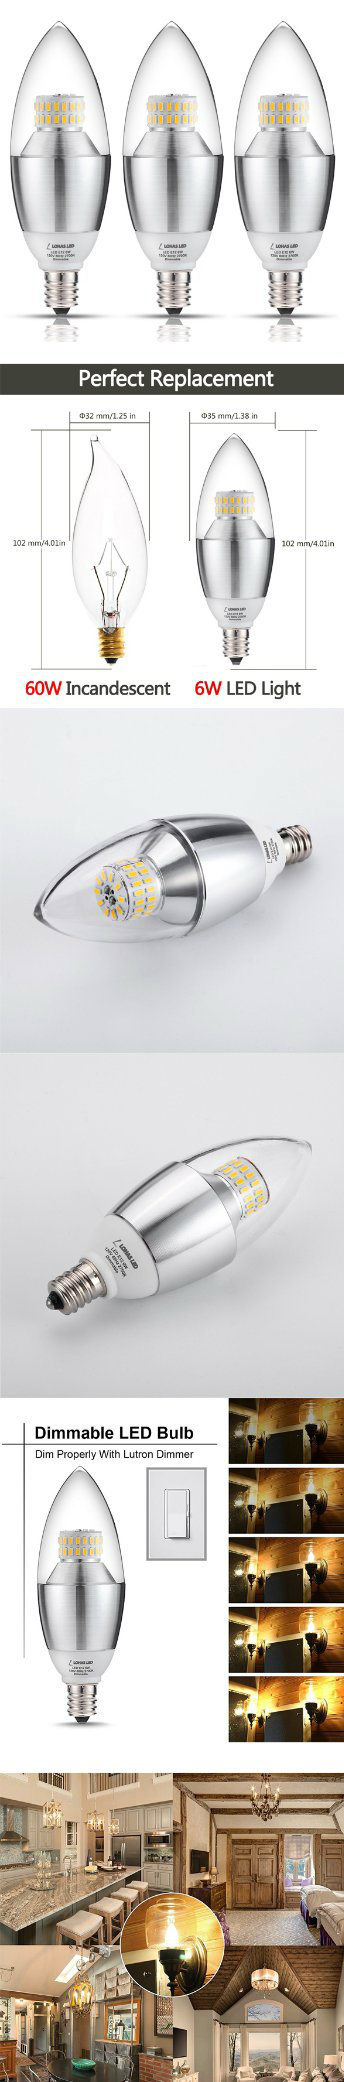 USA Market E12 6W Candelabra LED Candle Light Bulb with Ce RoHS UL